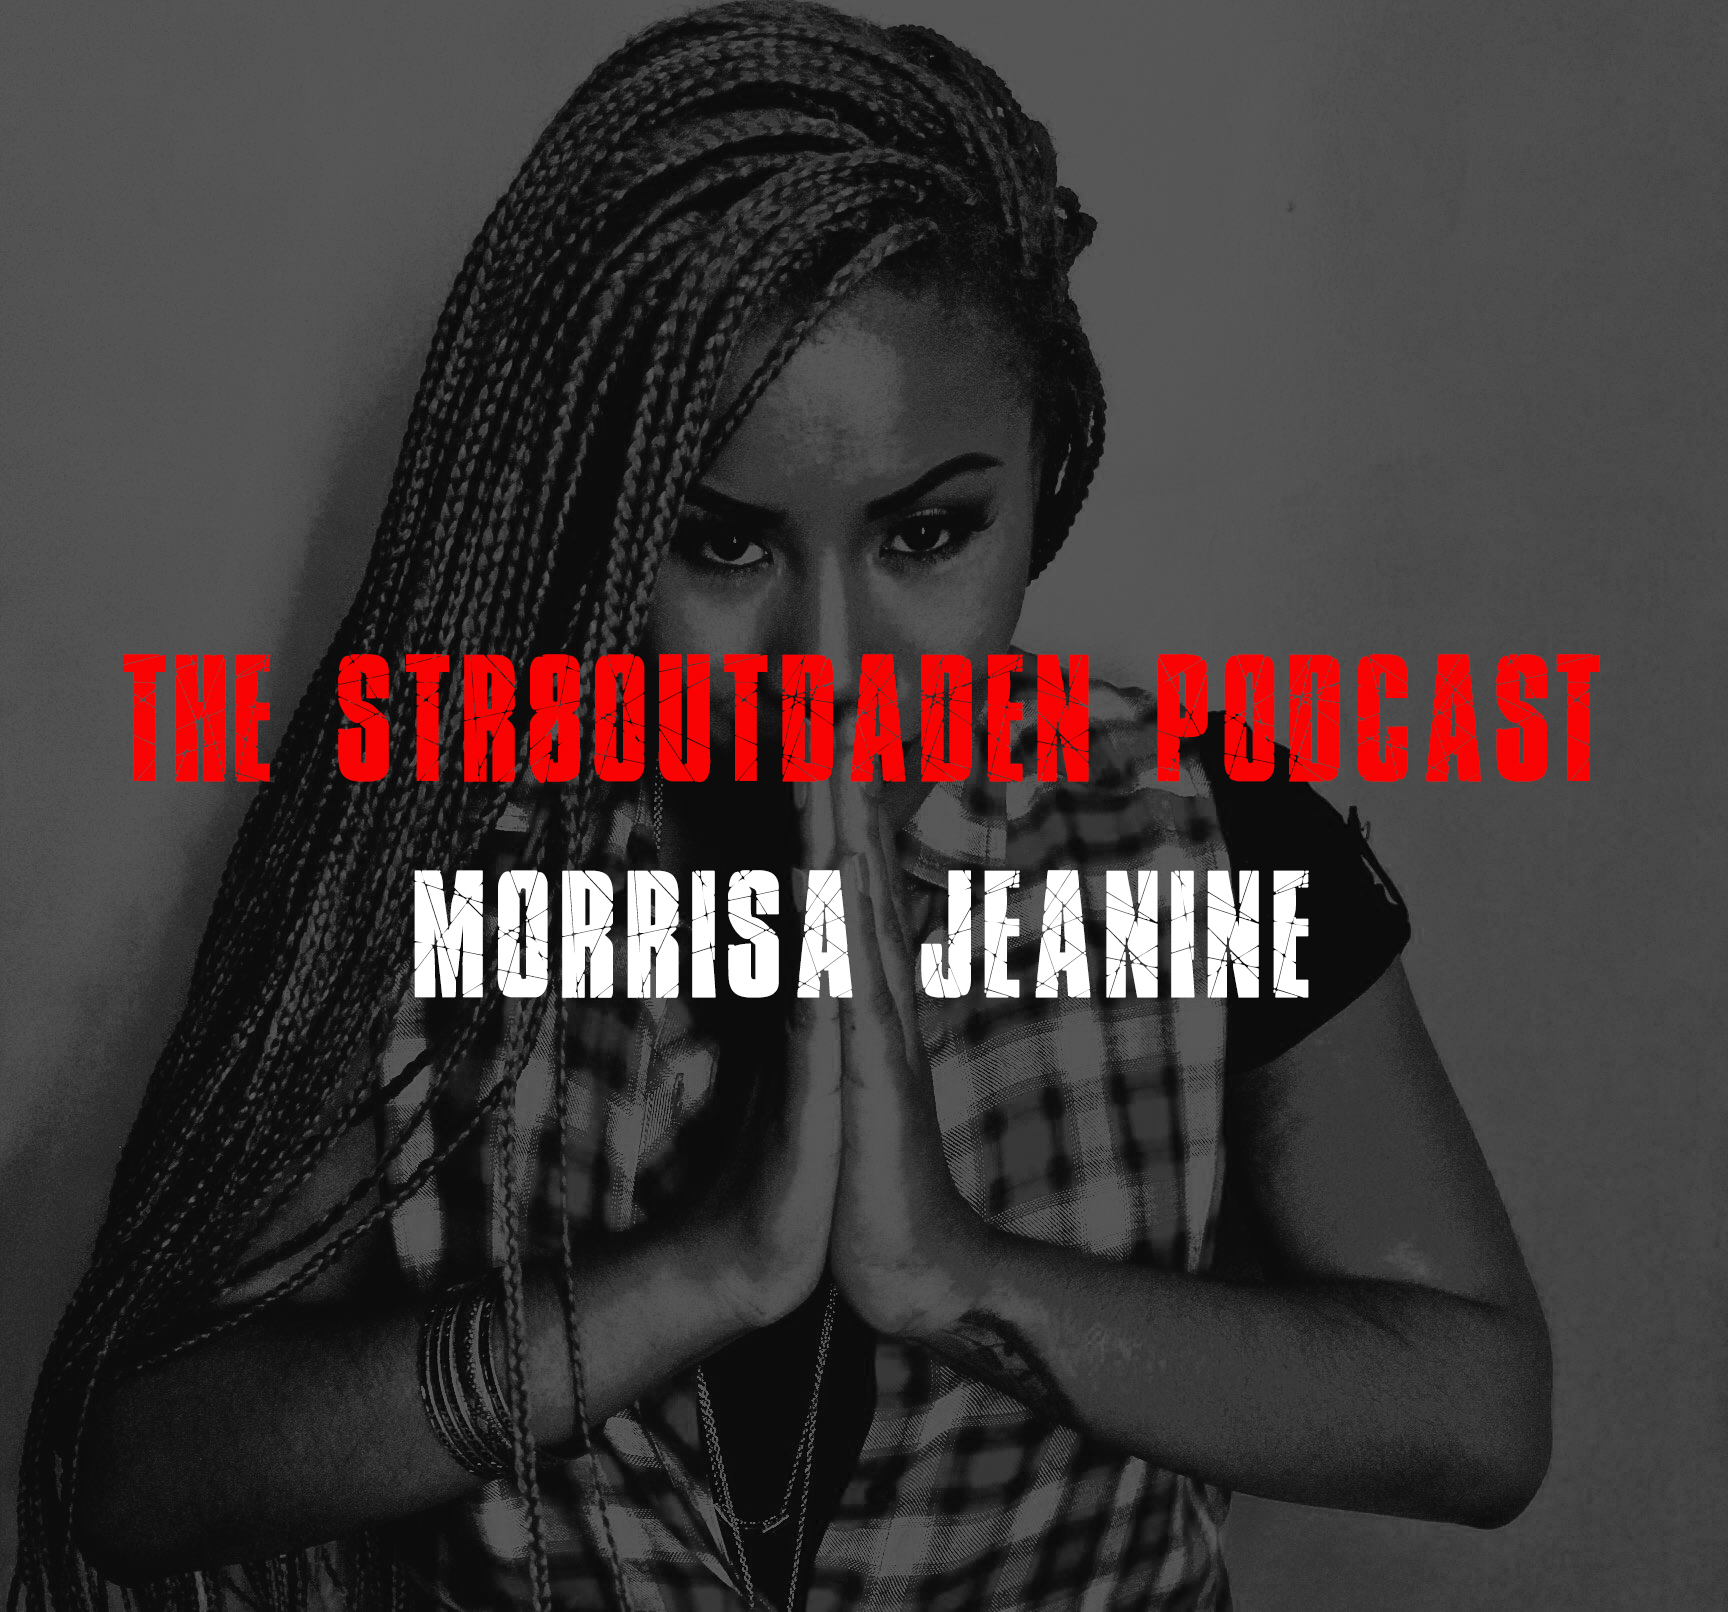 Morrisa Jeanine On The Str8OutDaDen Podcast